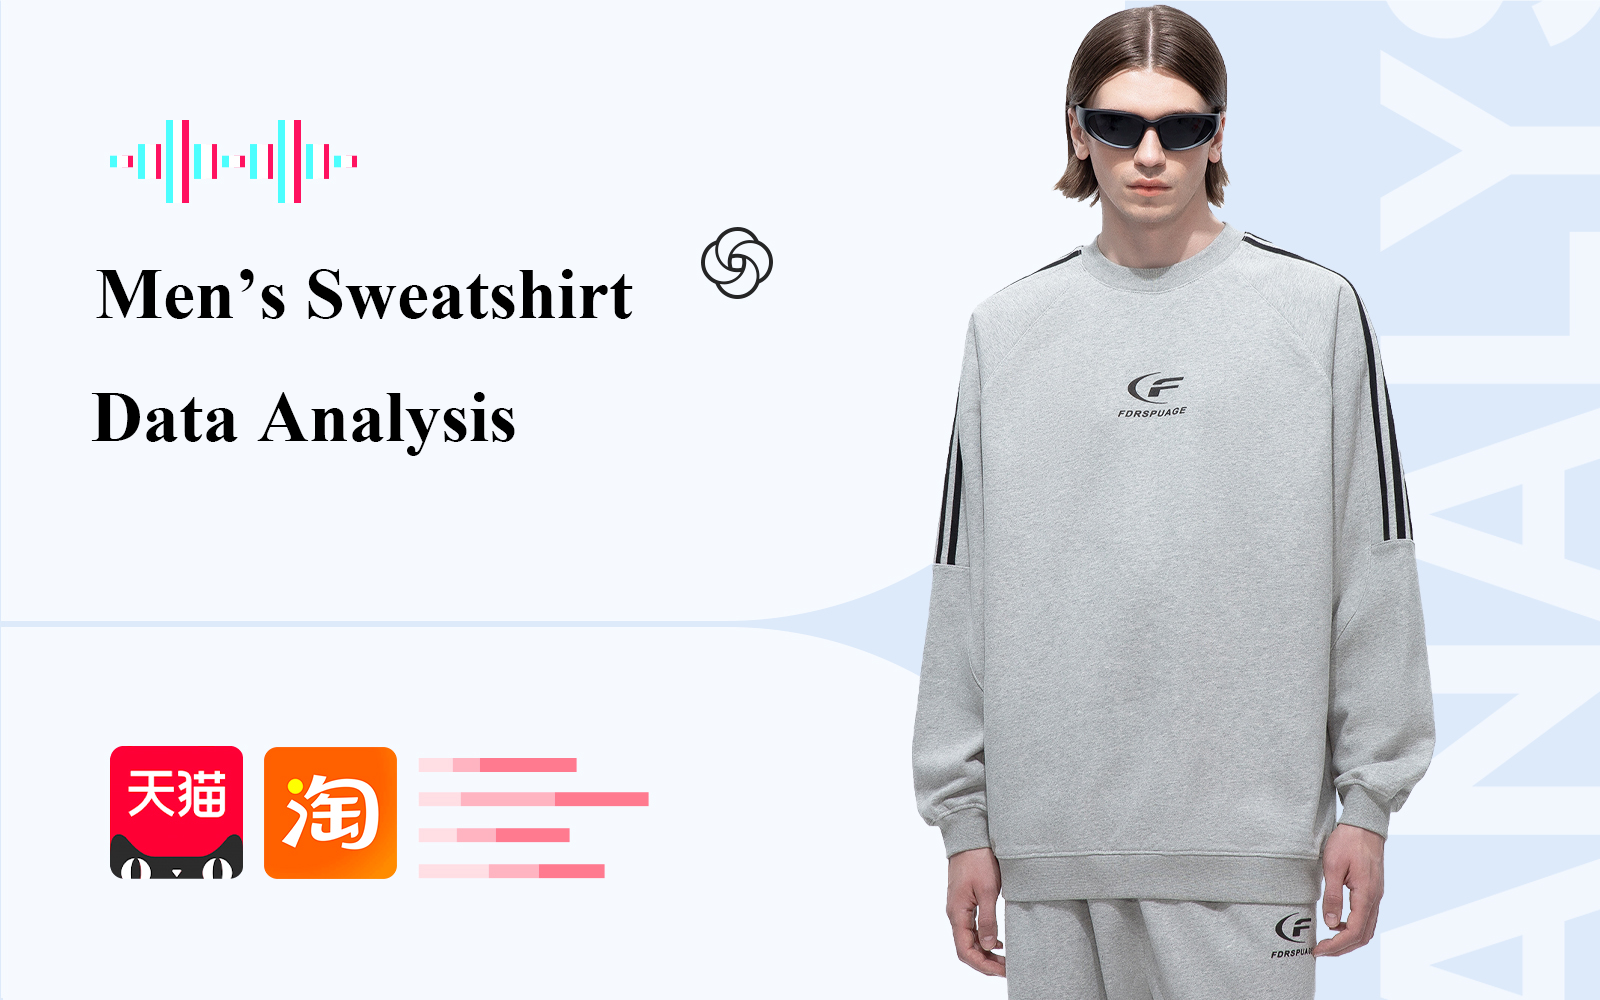 Sweatshirt -- The Data Analysis of E-Commerce Menswear